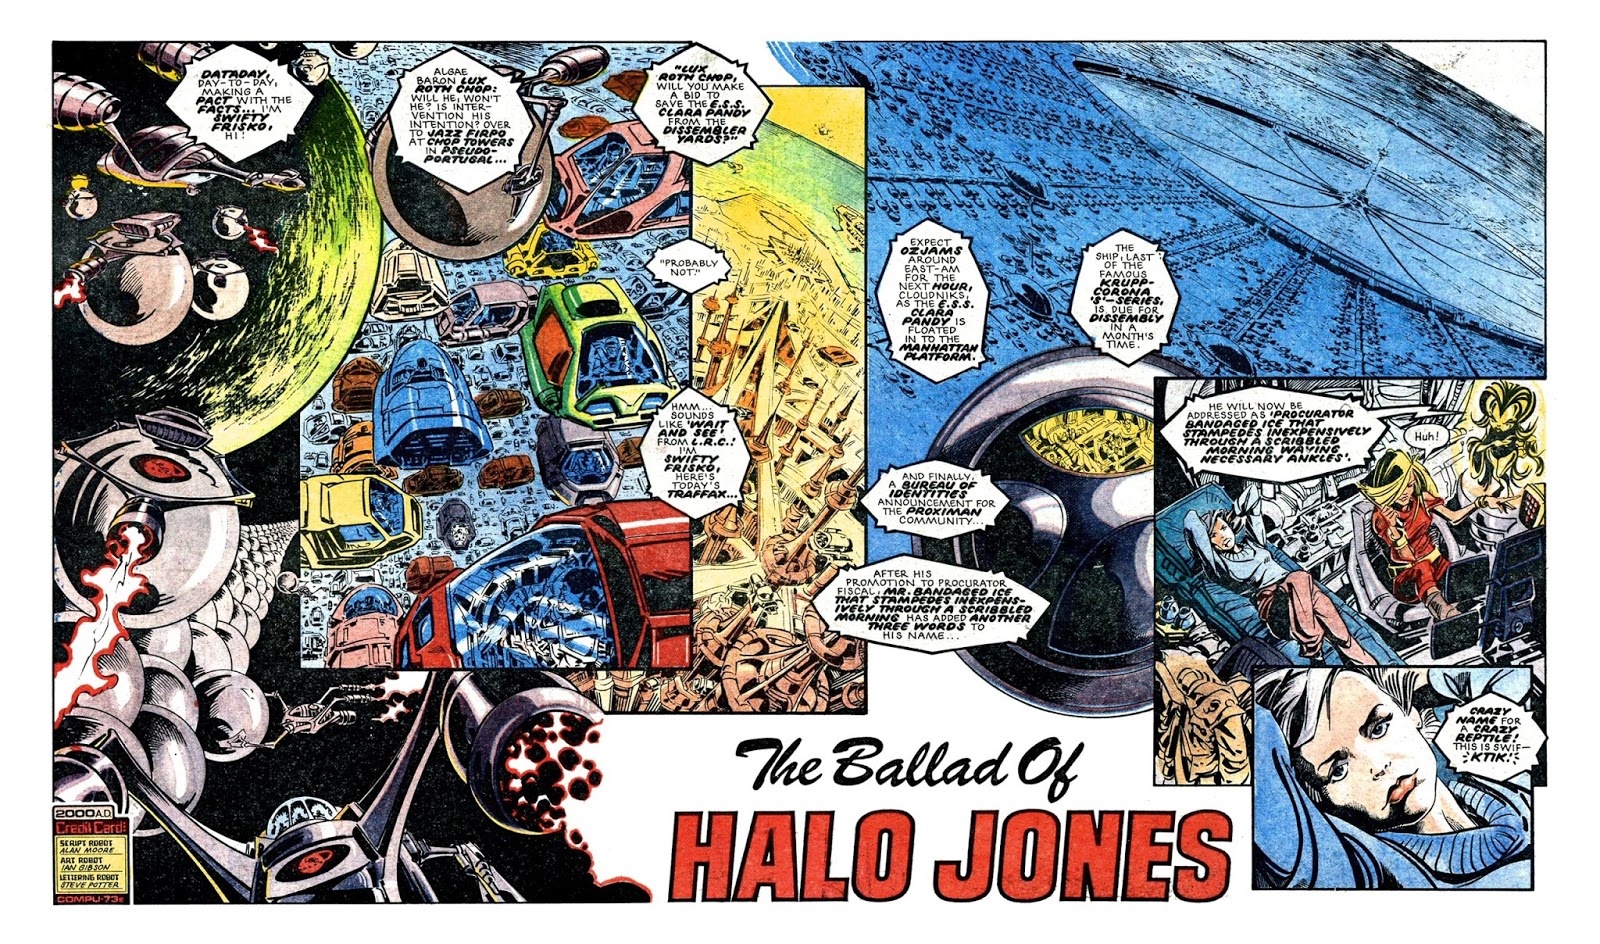 Amazing The Ballad Of Halo Jones Pictures & Backgrounds